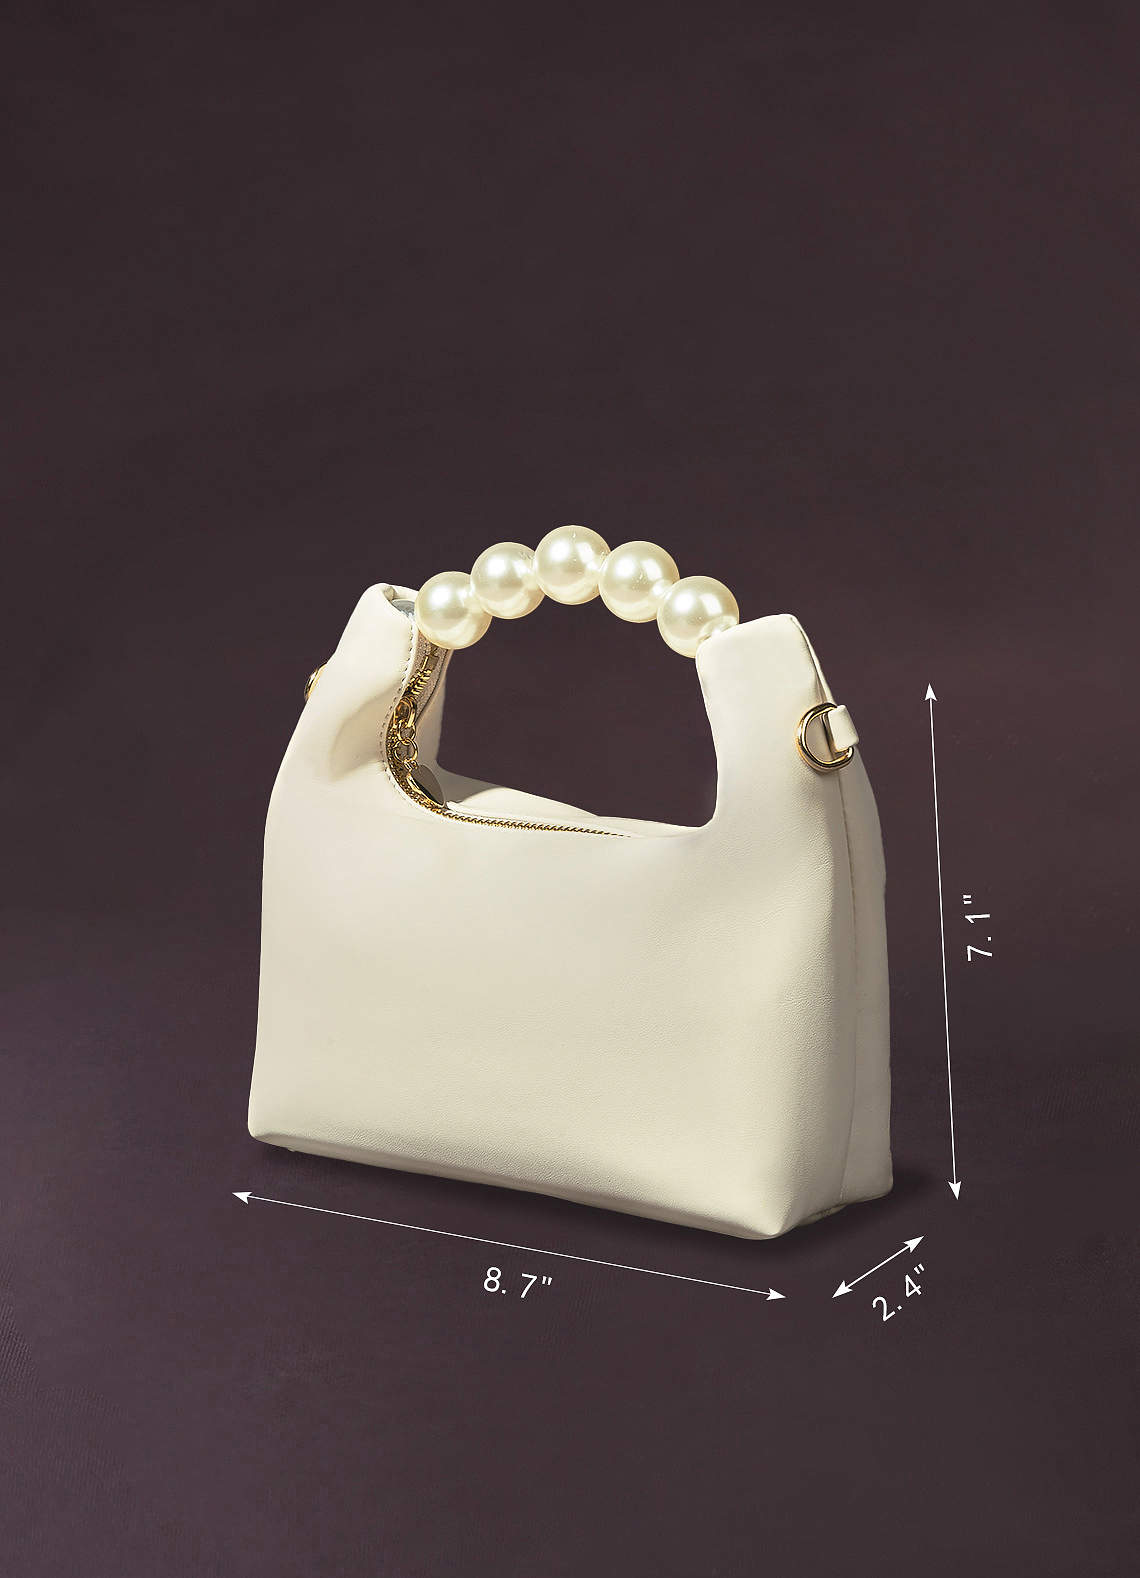 Handmade Woven Beaded Pearl Bags Women Handbags Party Bags | eBay